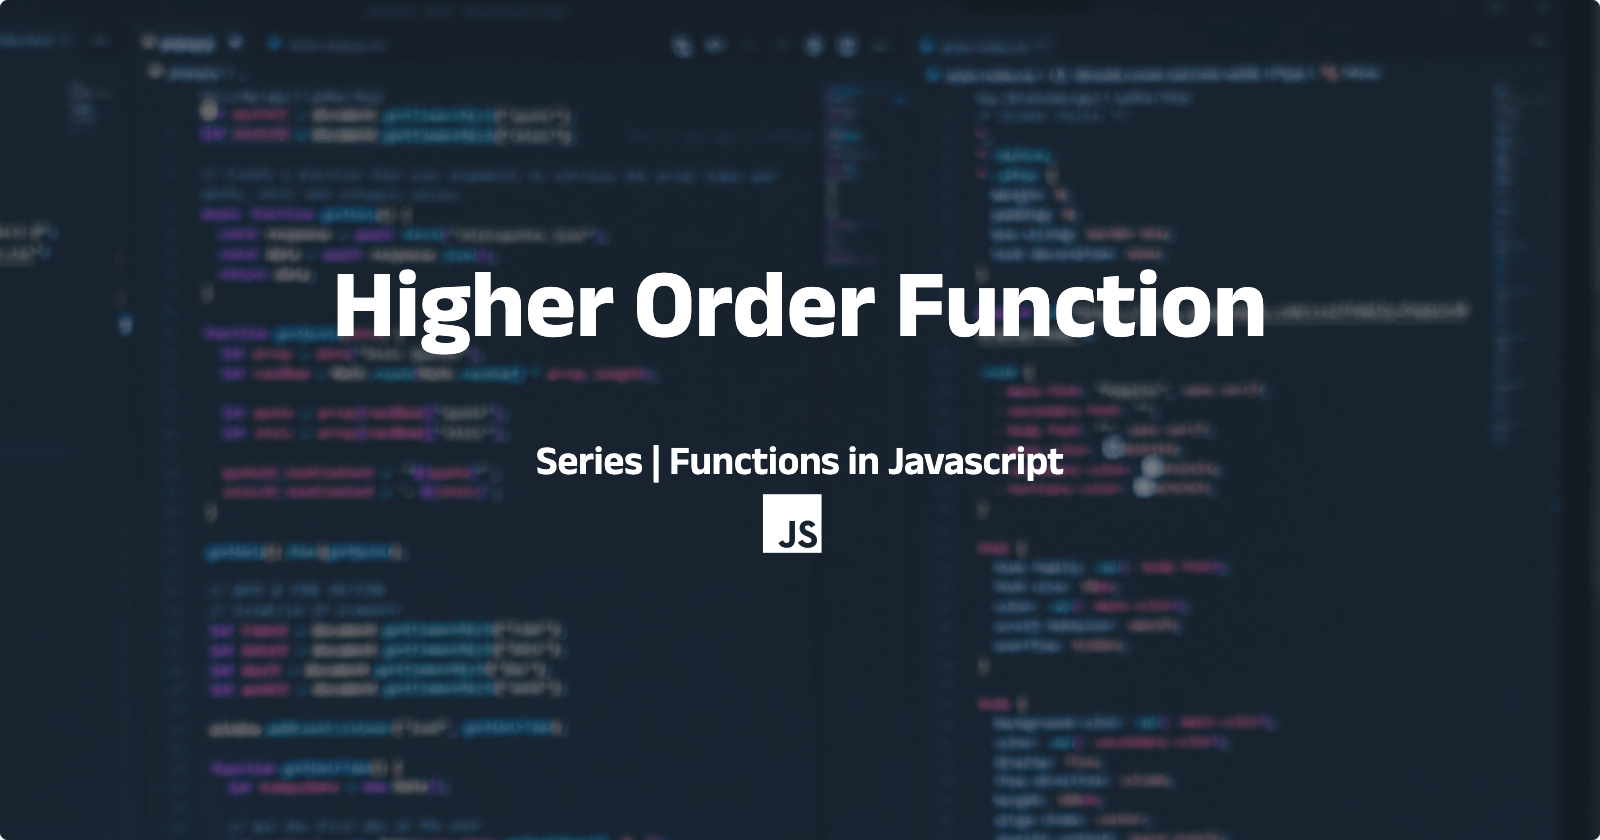 Higher Order Function in JS